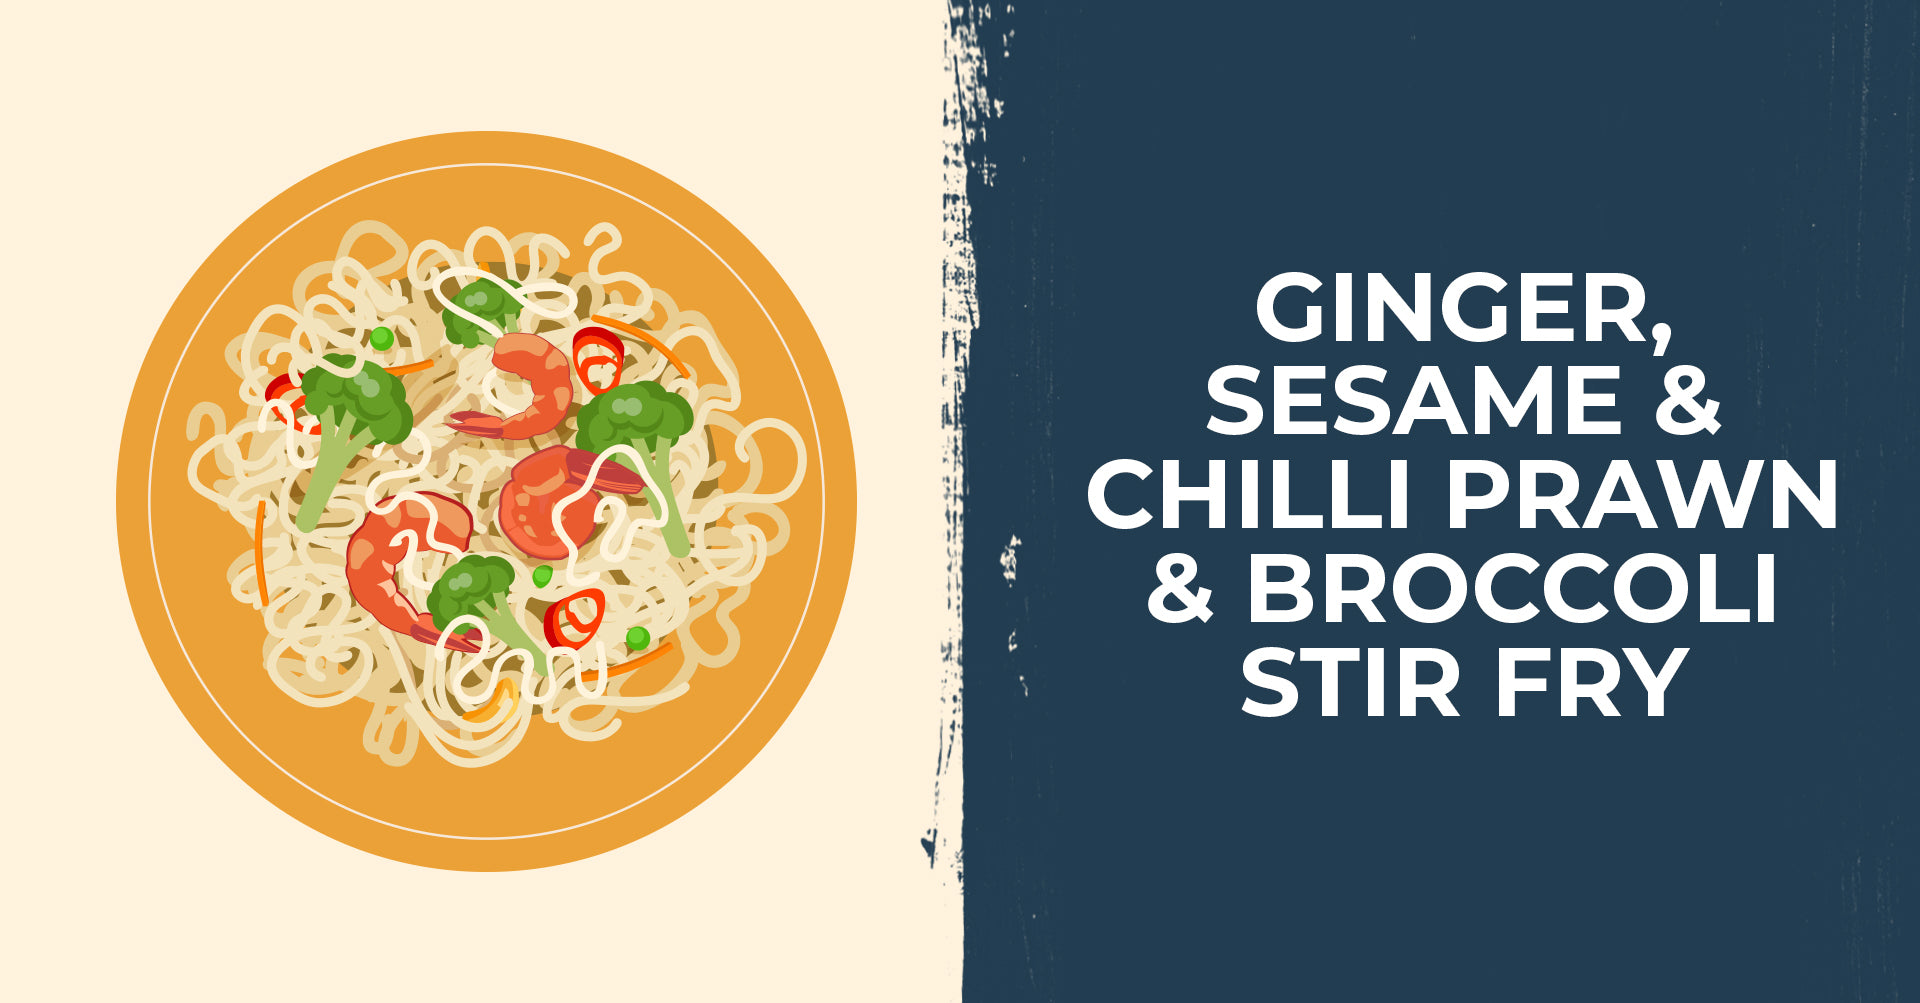 Easy Meals For Students: Chilli Prawn & Broccoli Stir Fry